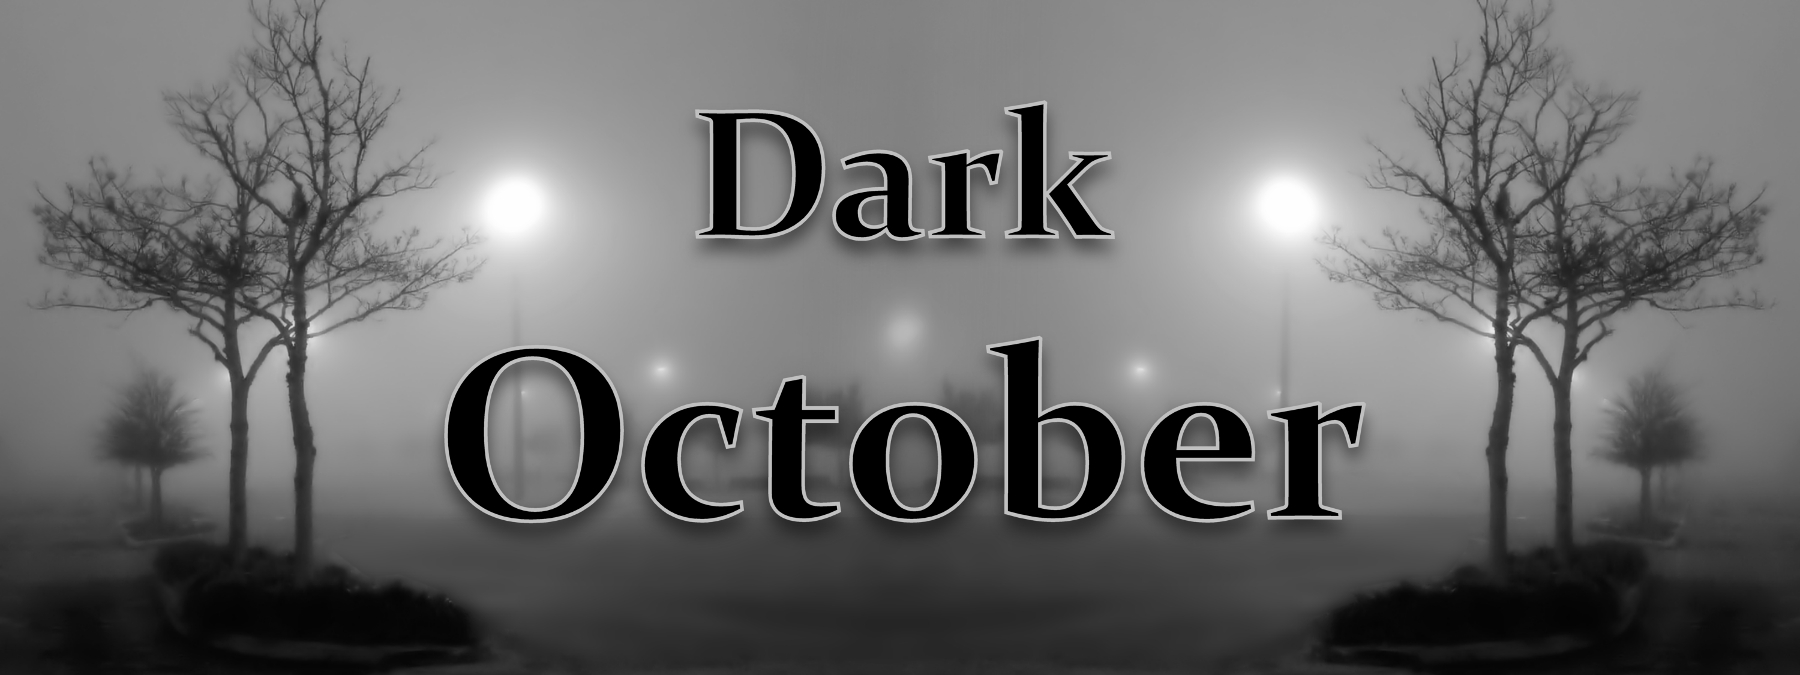 Dark October game.